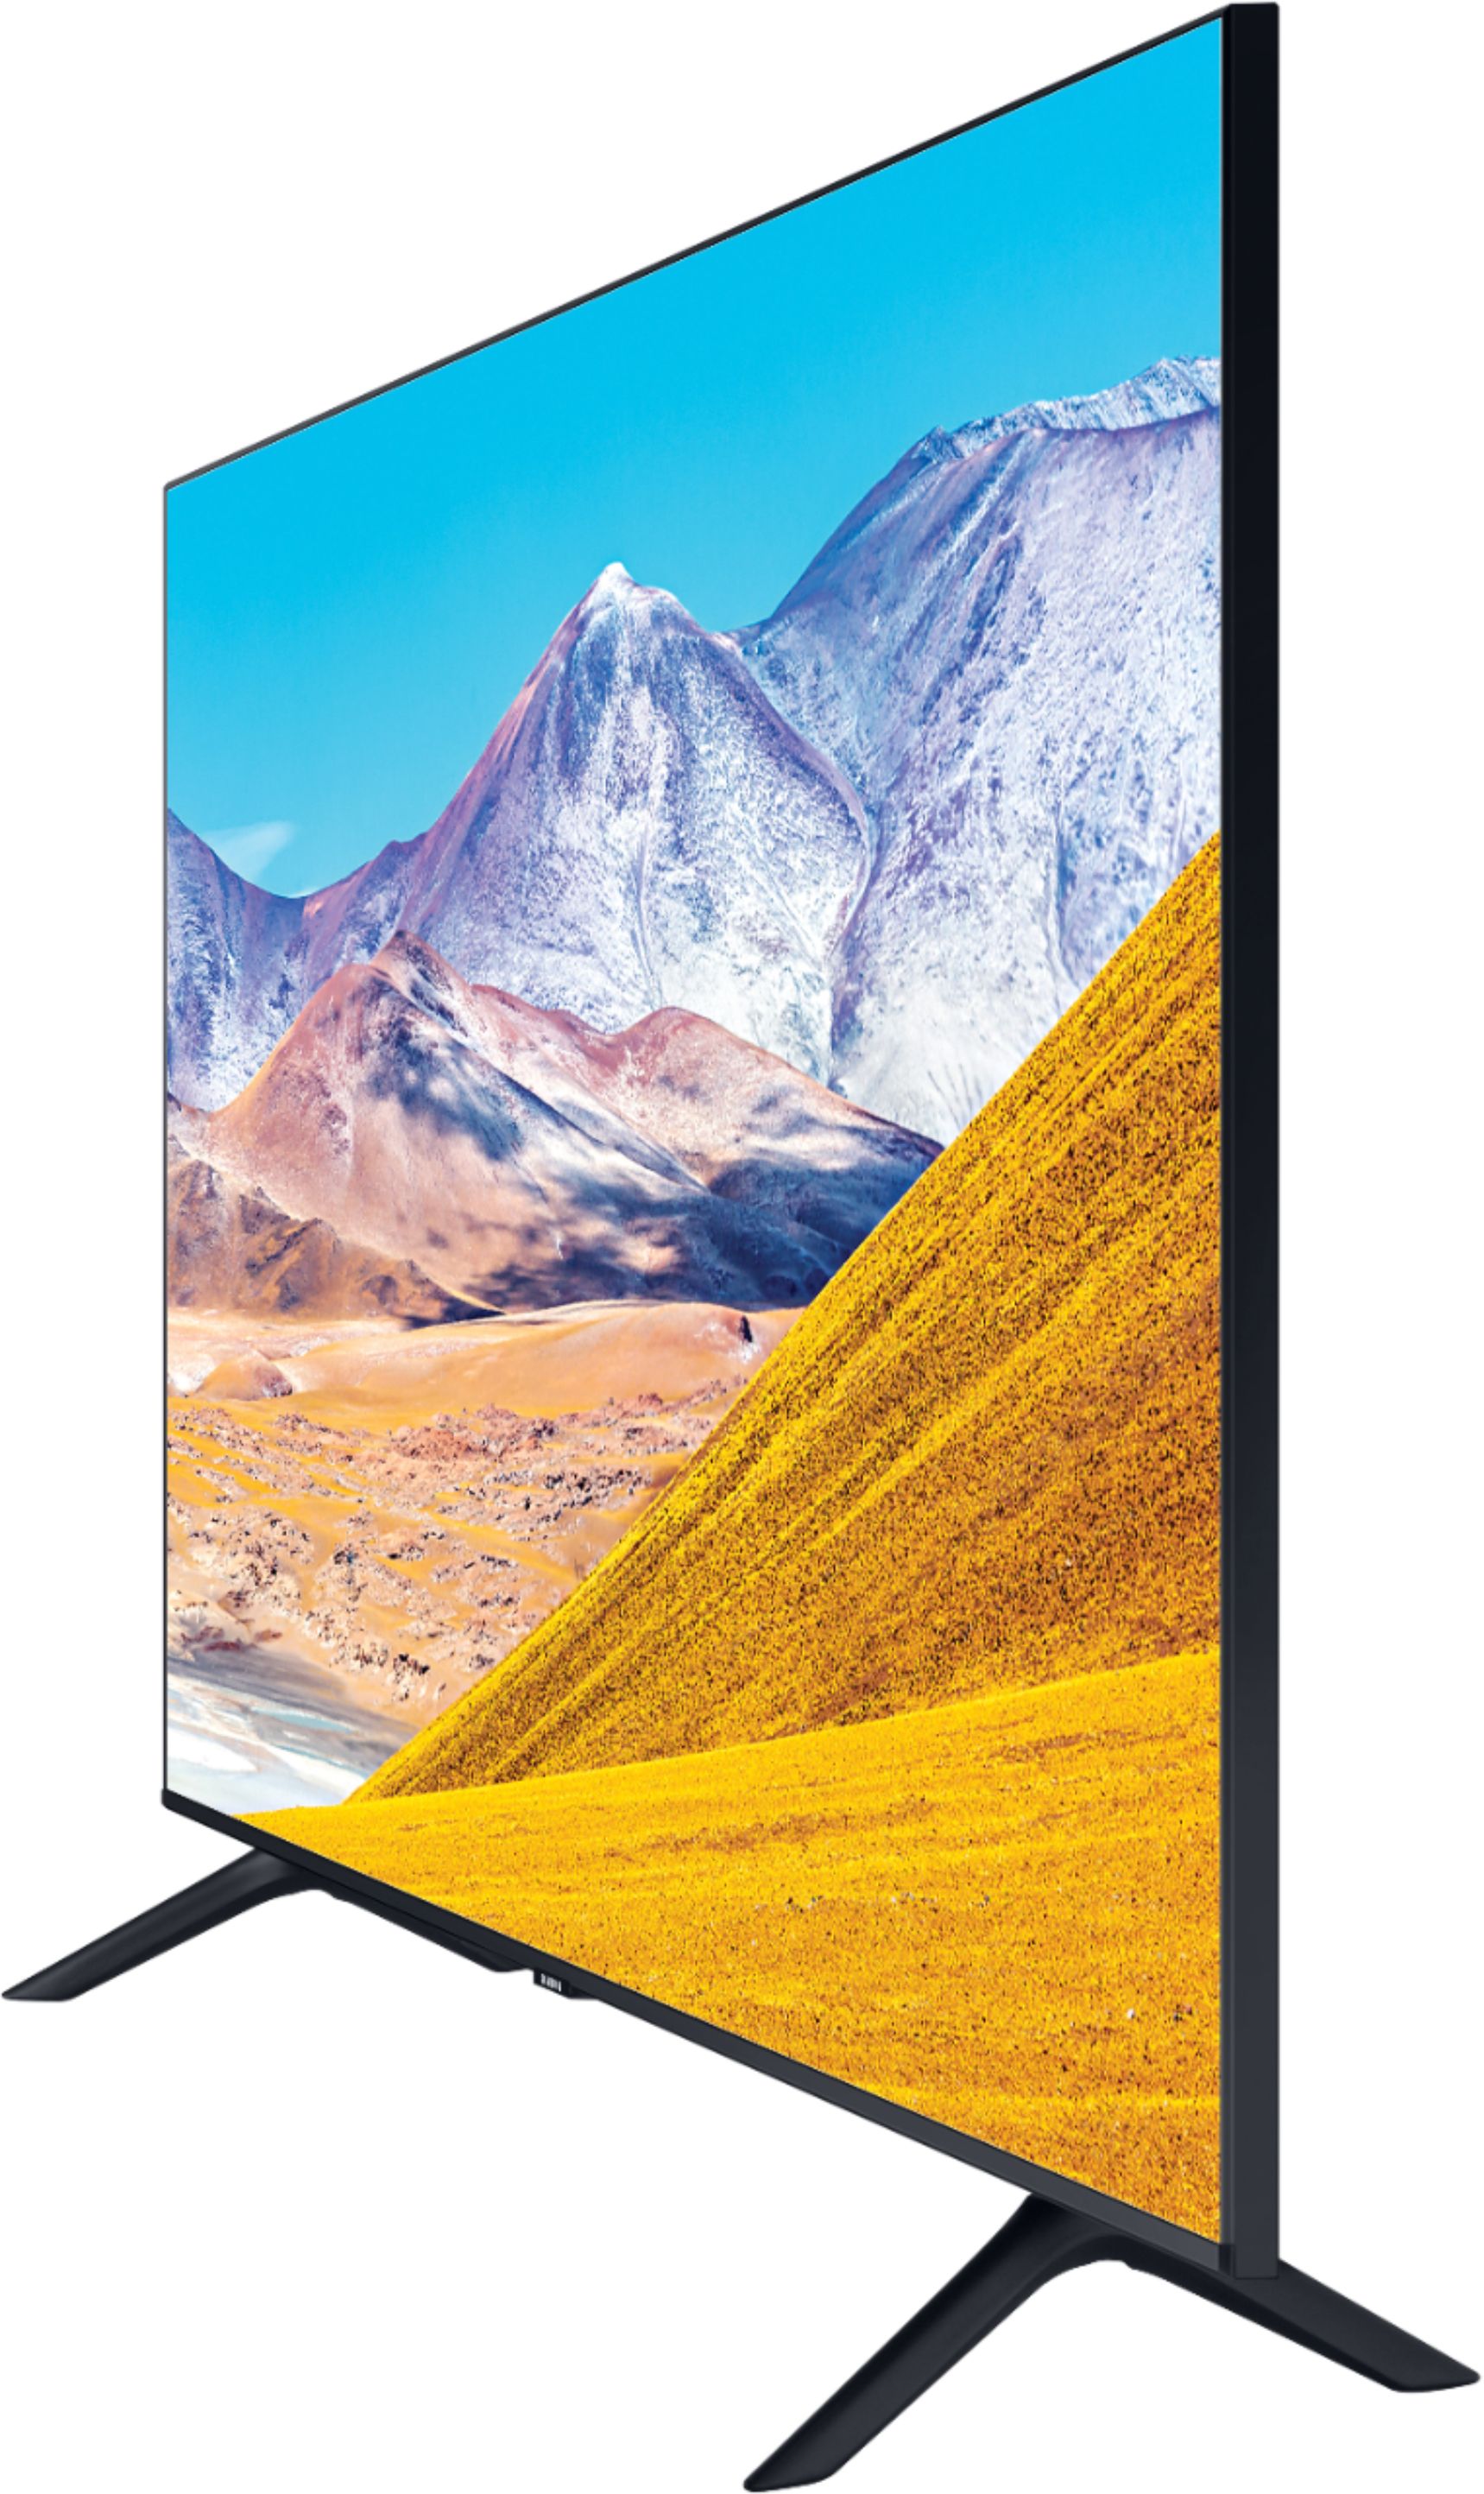  SAMSUNG 43-inch Class Crystal UHD TU-8000 Series - 4K UHD HDR Smart  TV with Alexa Built-in (UN43TU8000FXZA, 2020 Model) : Electronics